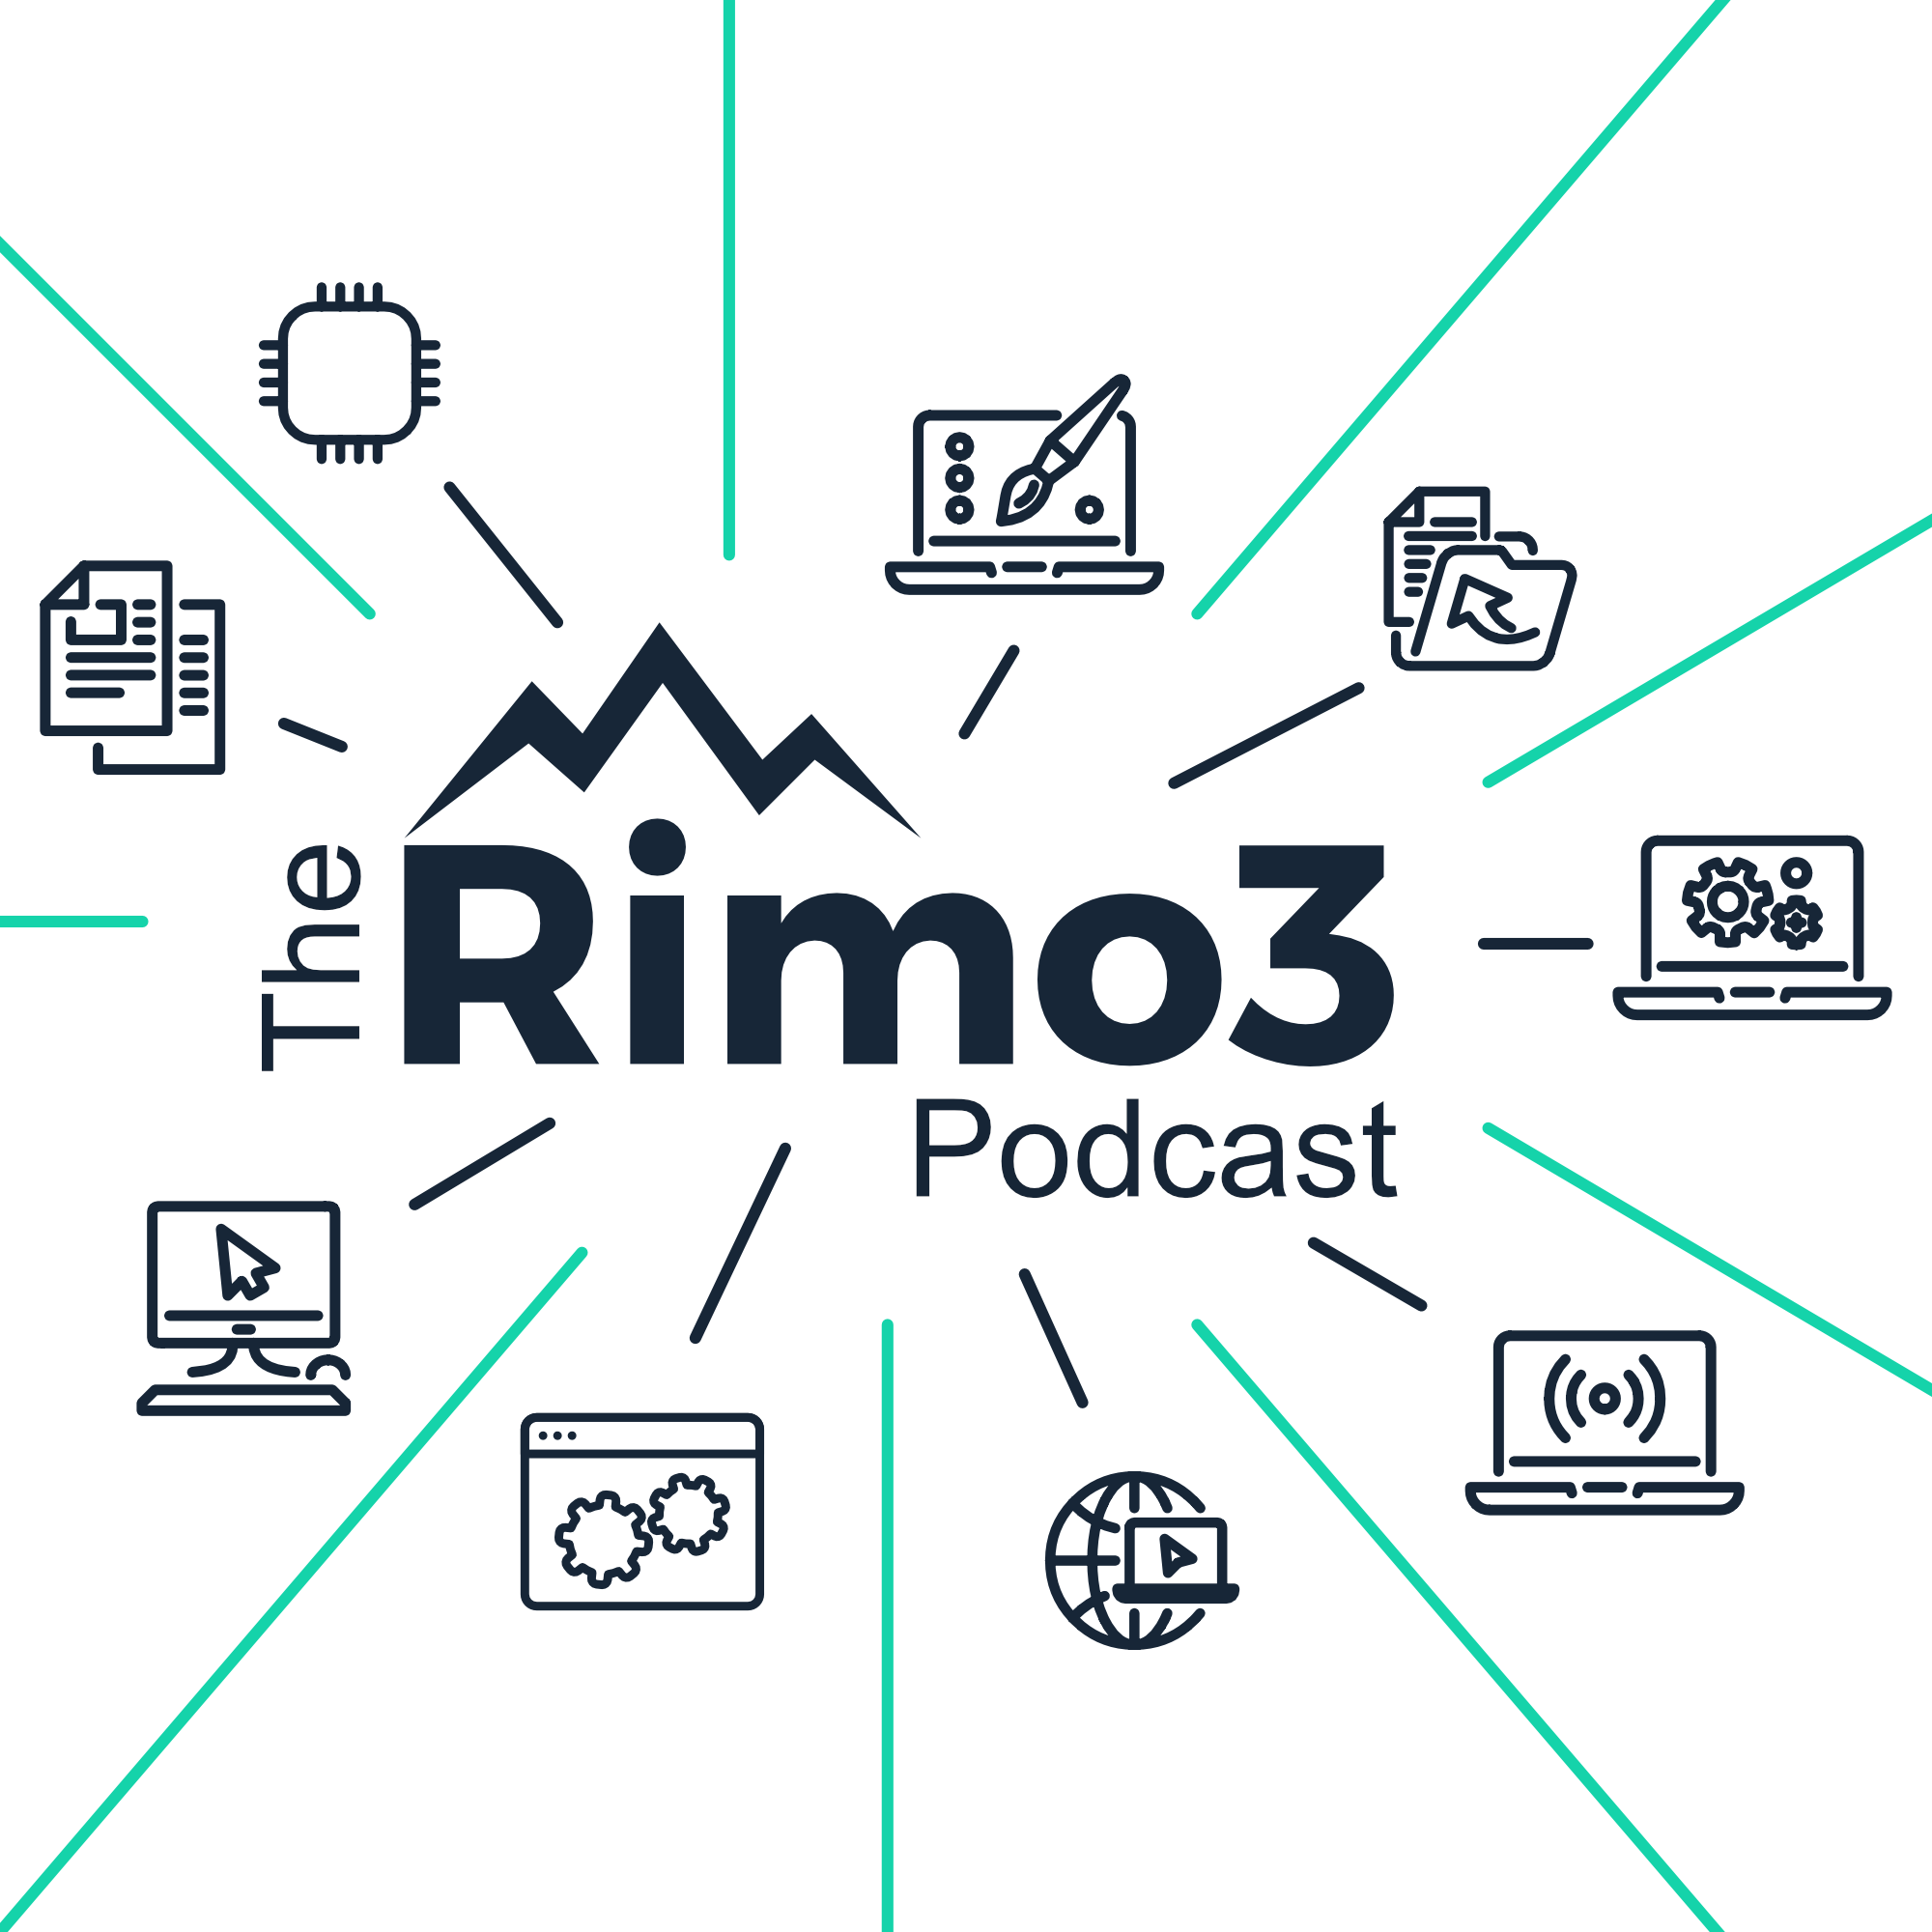 Rimo3 Podcast 